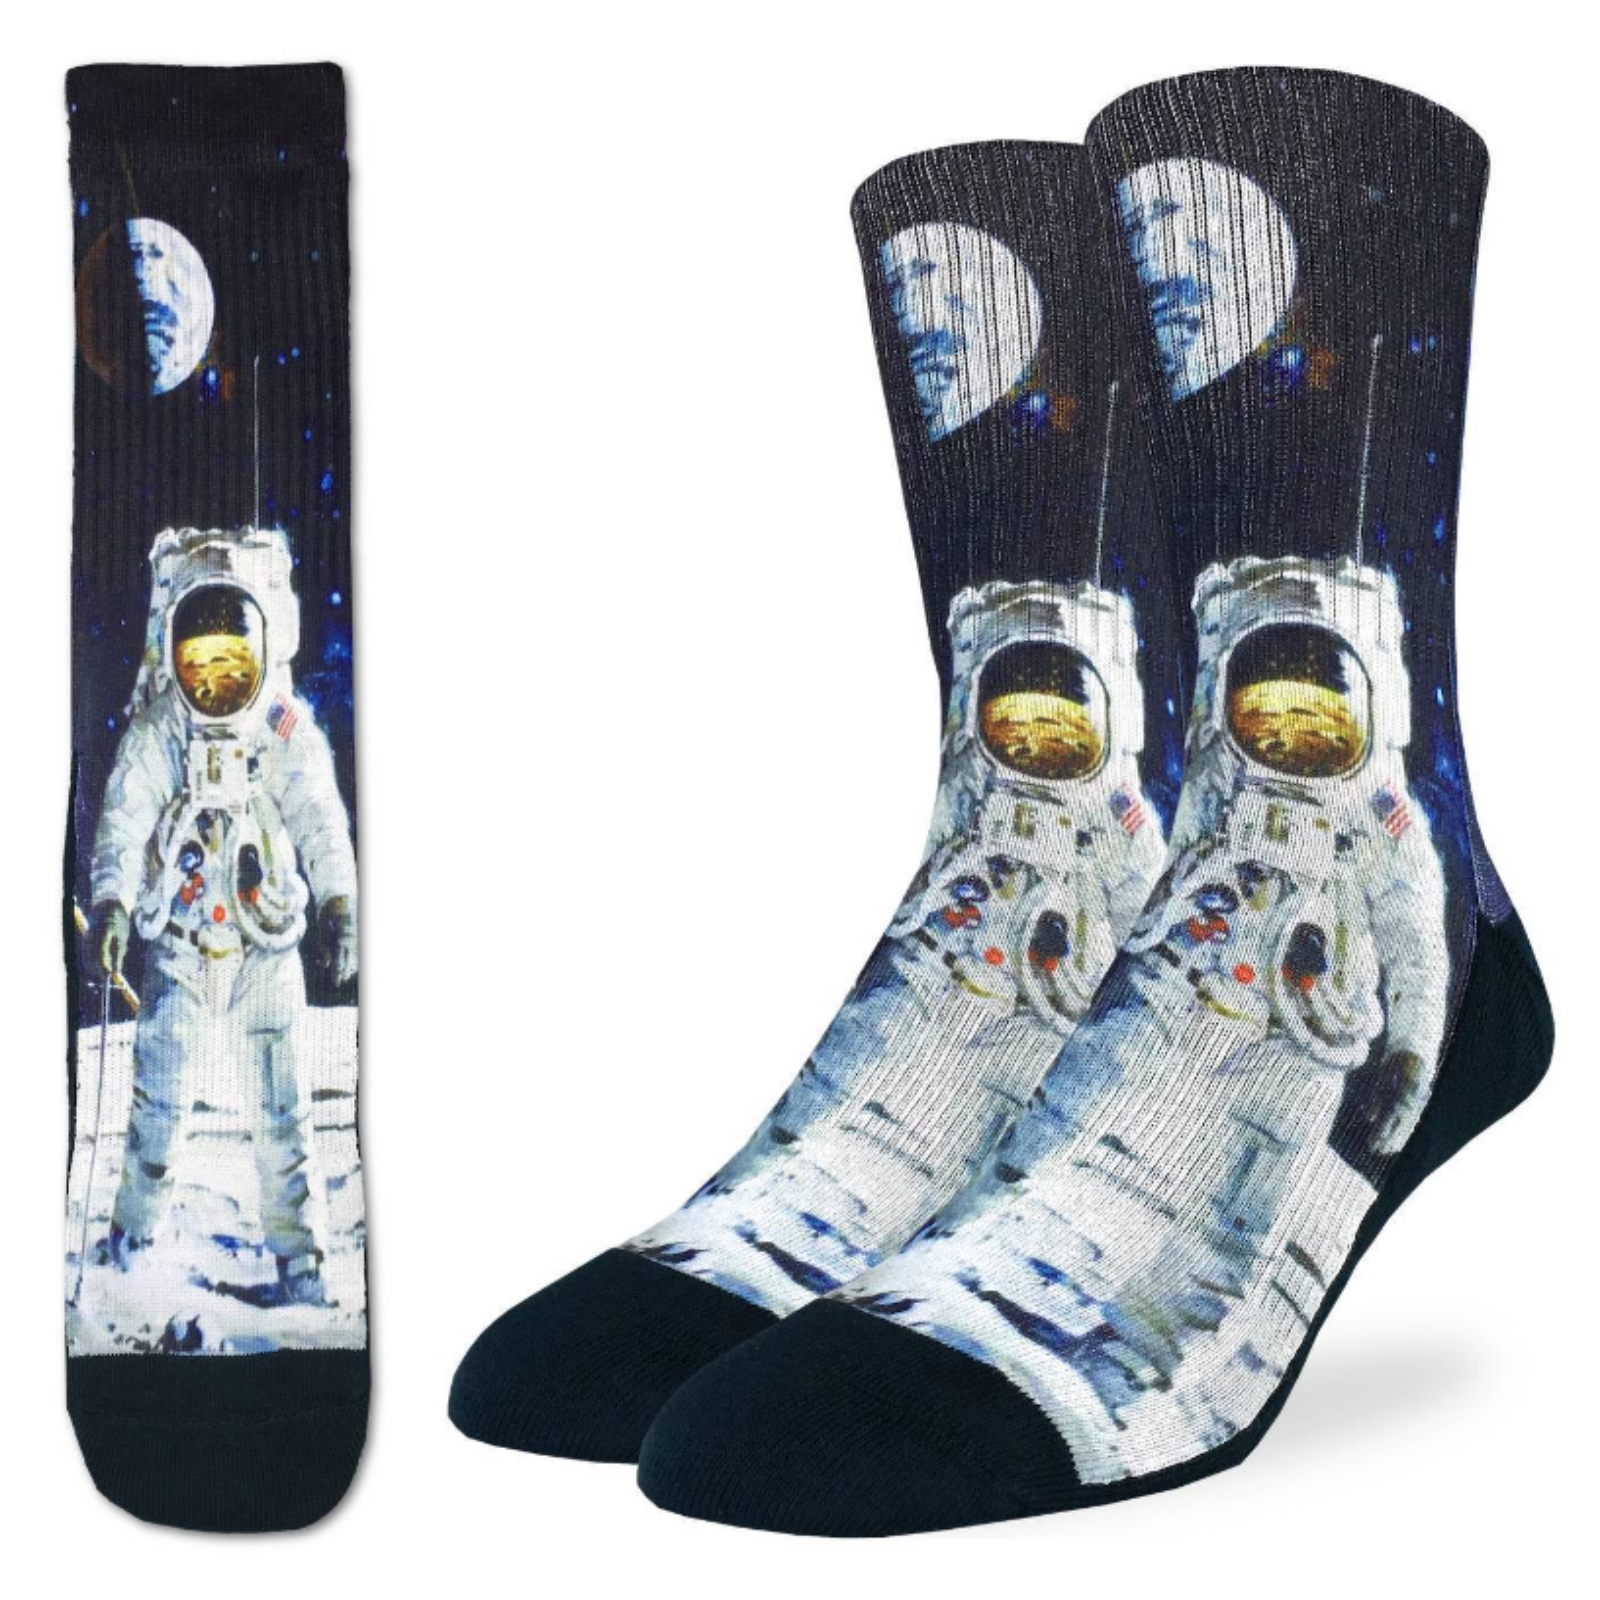 Good Luck Sock Apollo Astronaut men's crew sock featuring black sock with image of Apollo astronaut on the moon. Socks shown on display feet. 